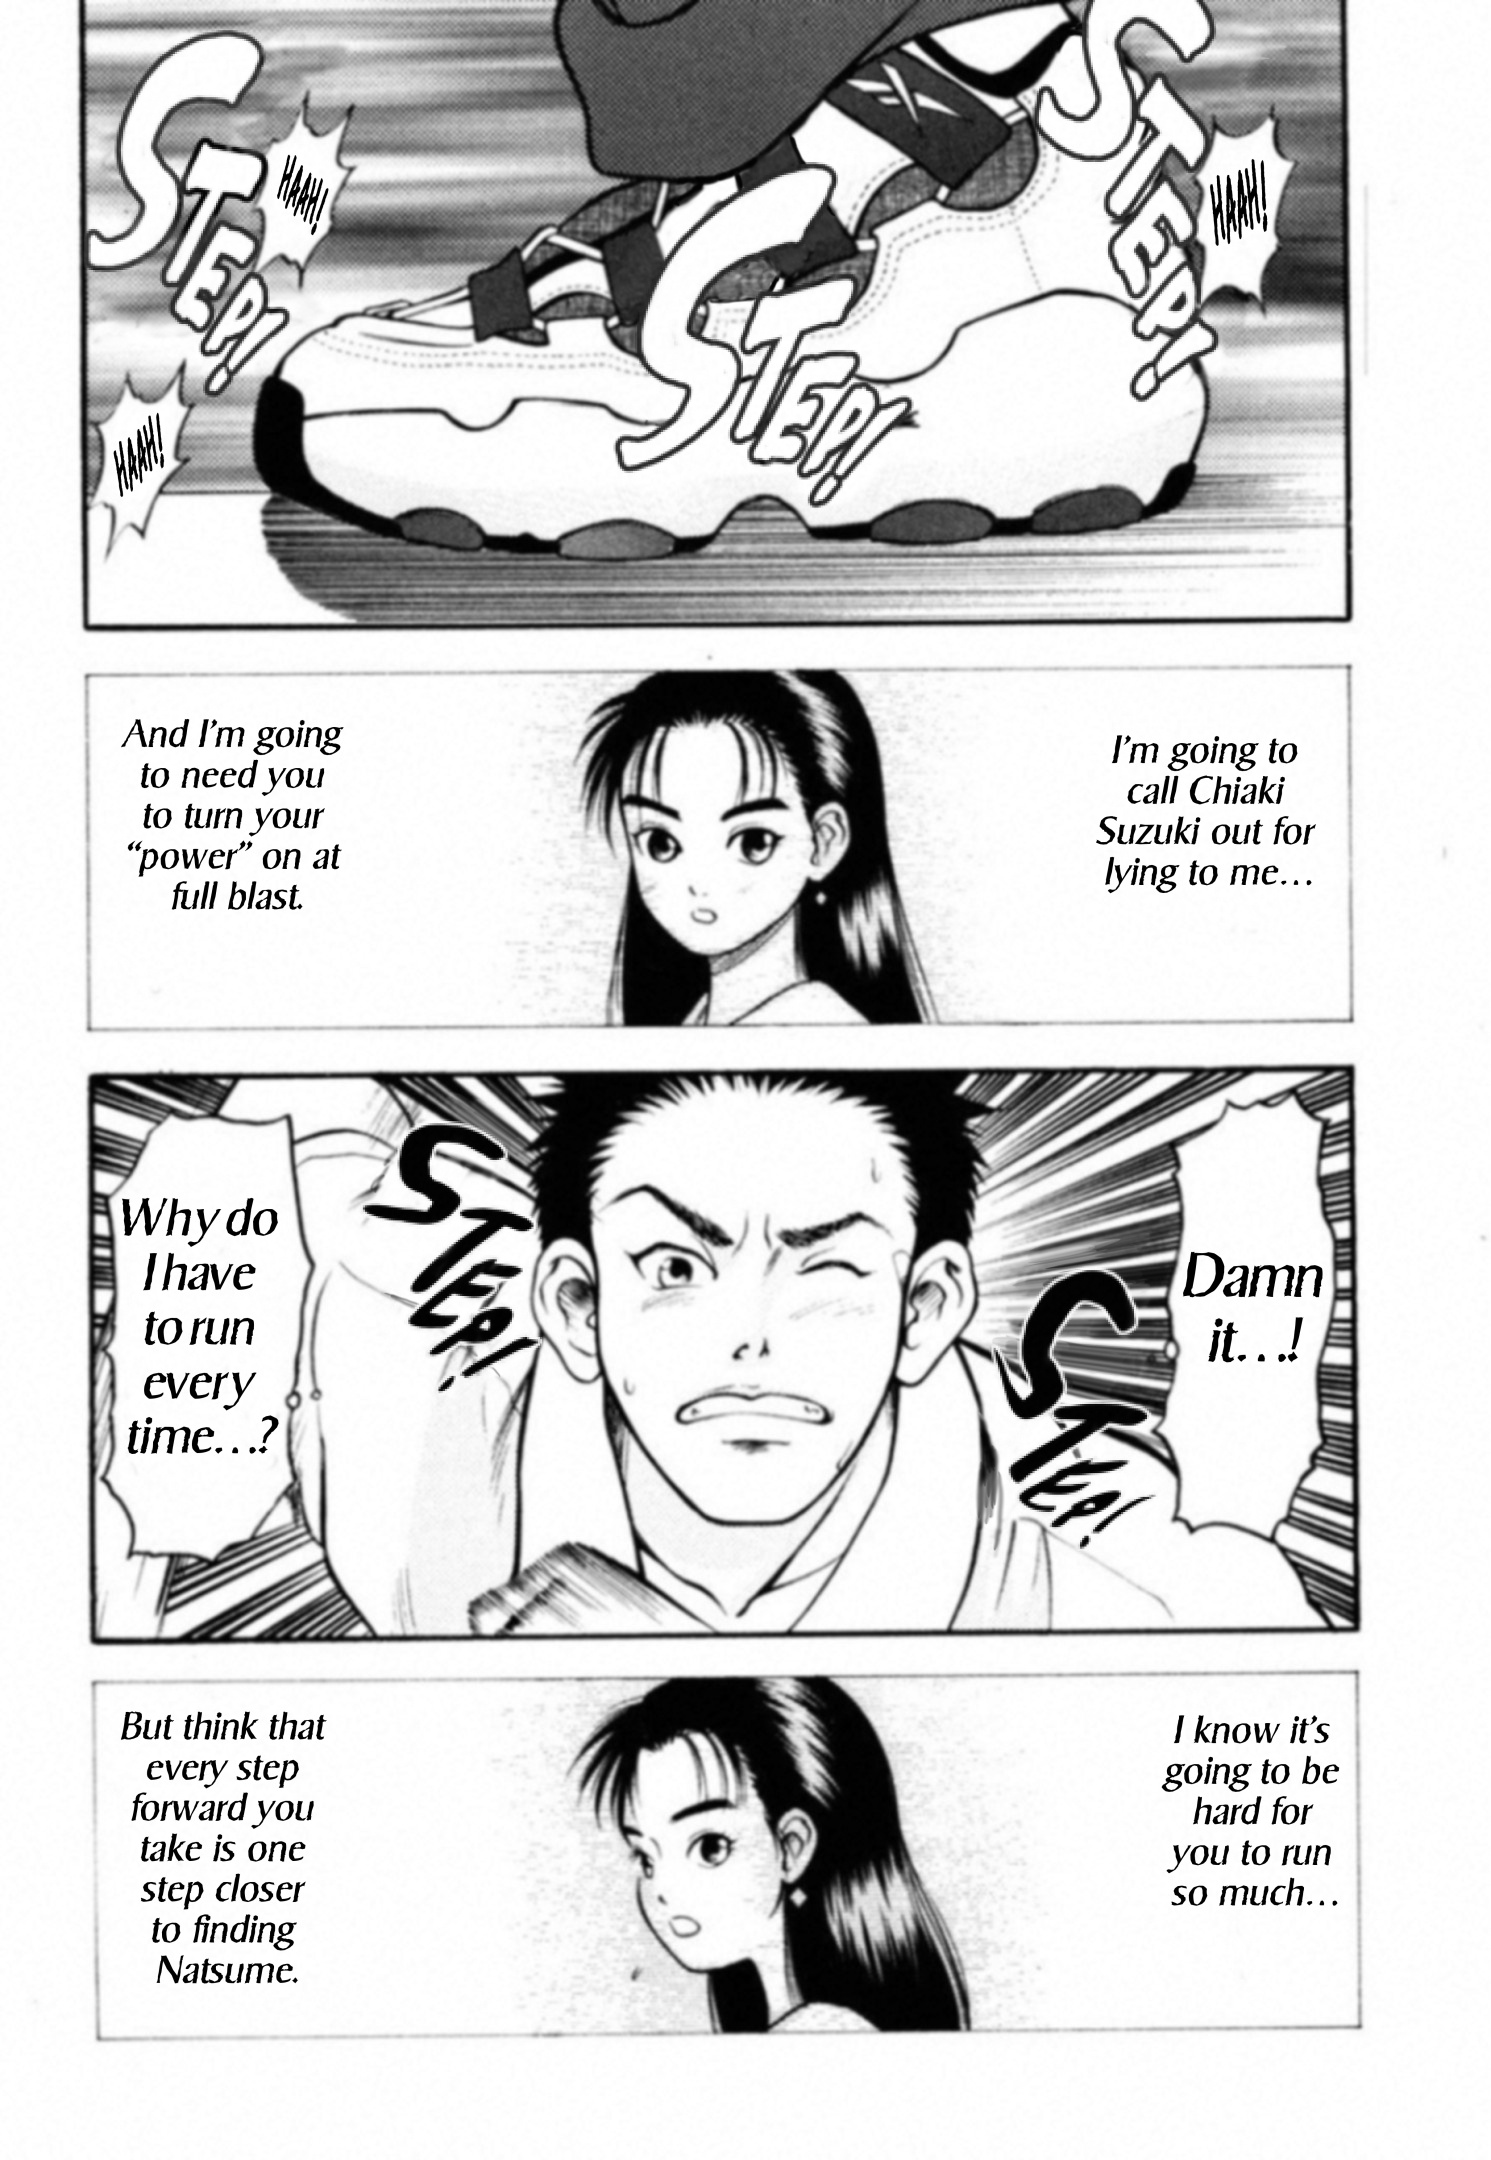 Kakeru Vol.1 Chapter 4: The Runaway Girl - 4 - Picture 2